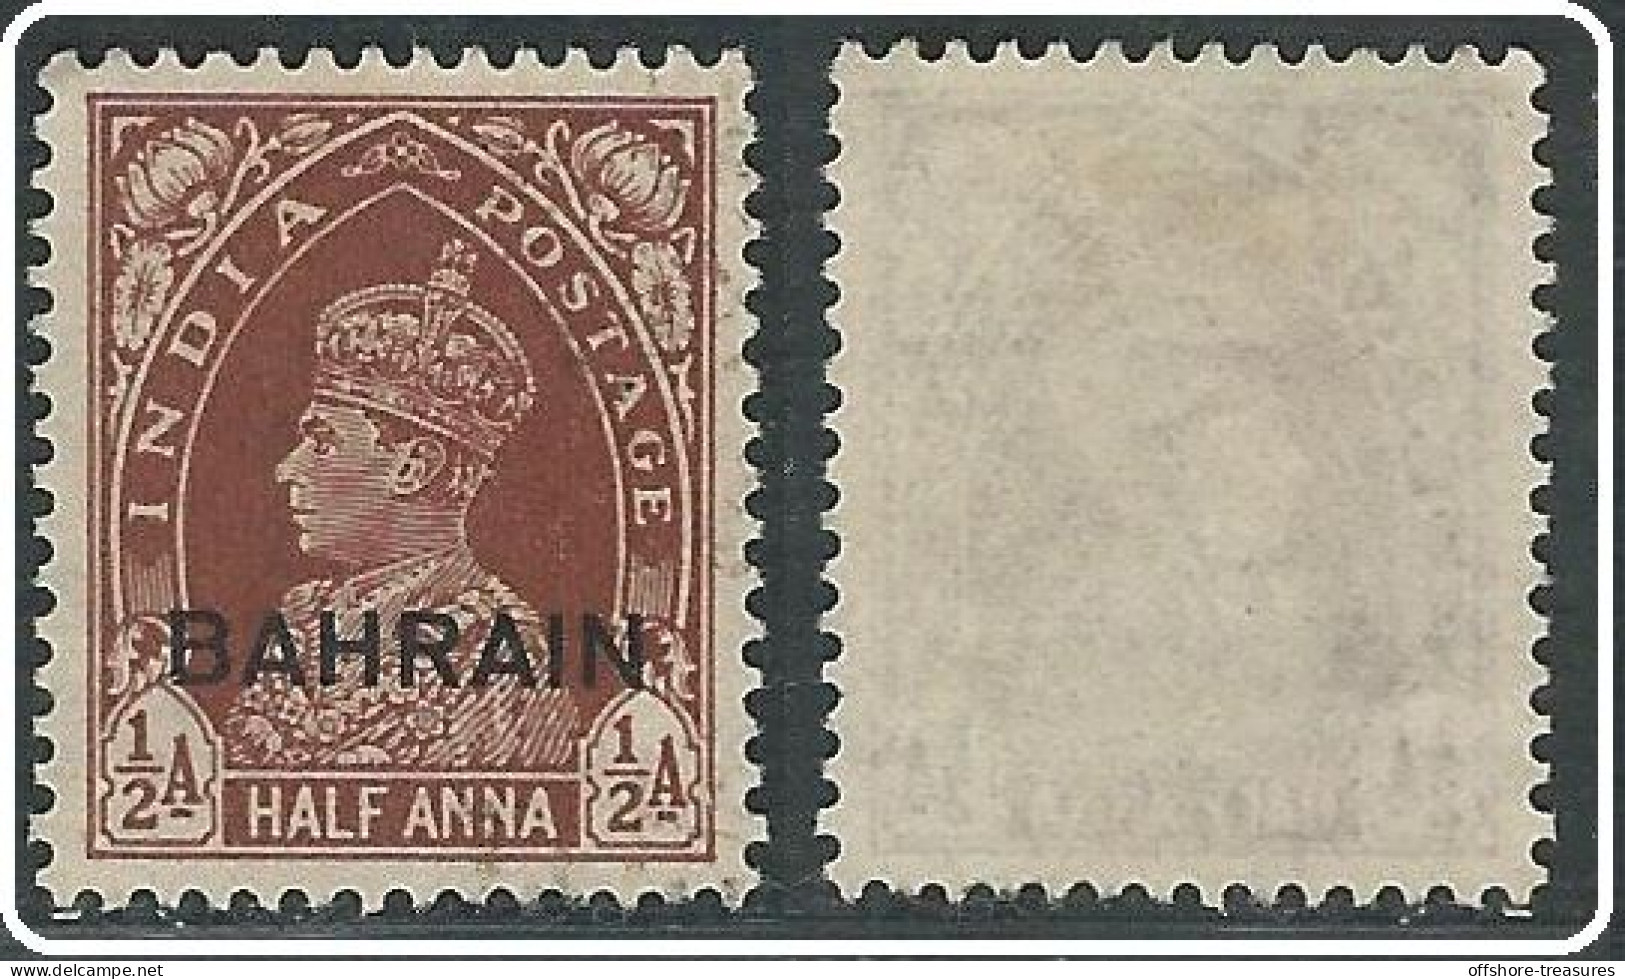 BAHRAIN POSTAGE Stamp Half Anna Transport Set Lot 1938 - 1941 SG 21 USED RED BROWN King George Annas Stamps - Bahrain (...-1965)